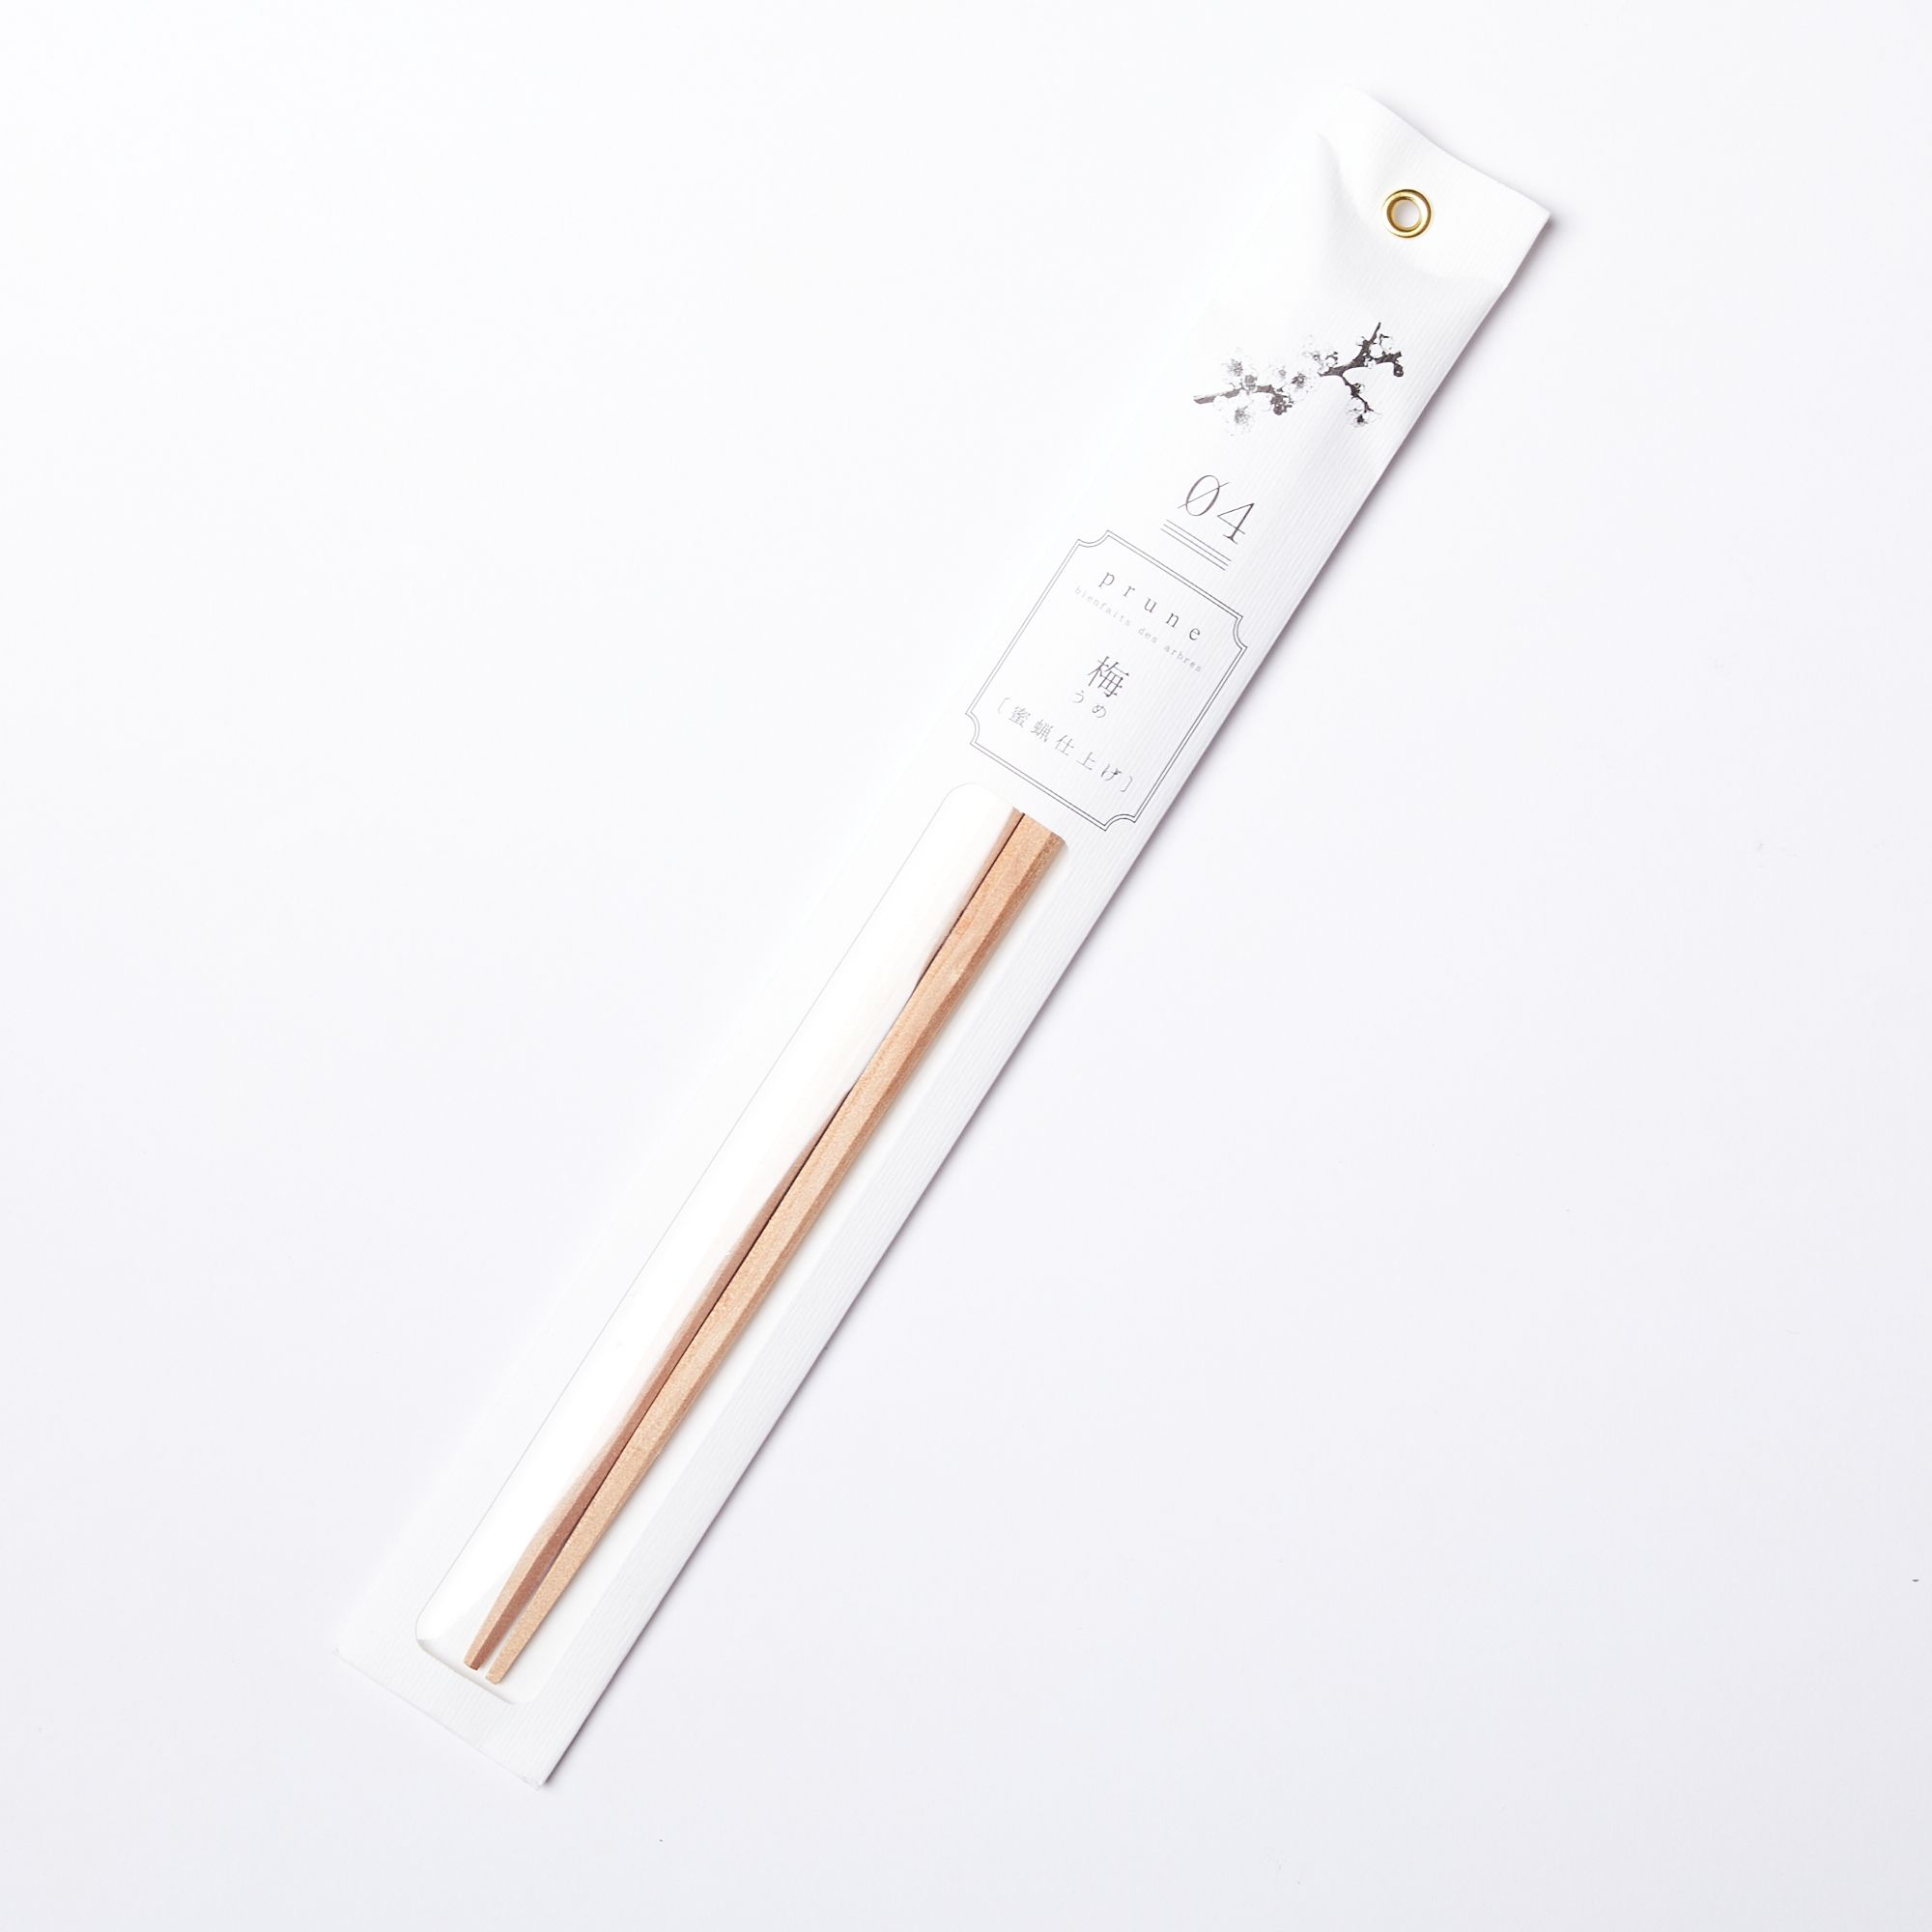 Simple pair of light wood chopsticks packaged in thin paper packaging